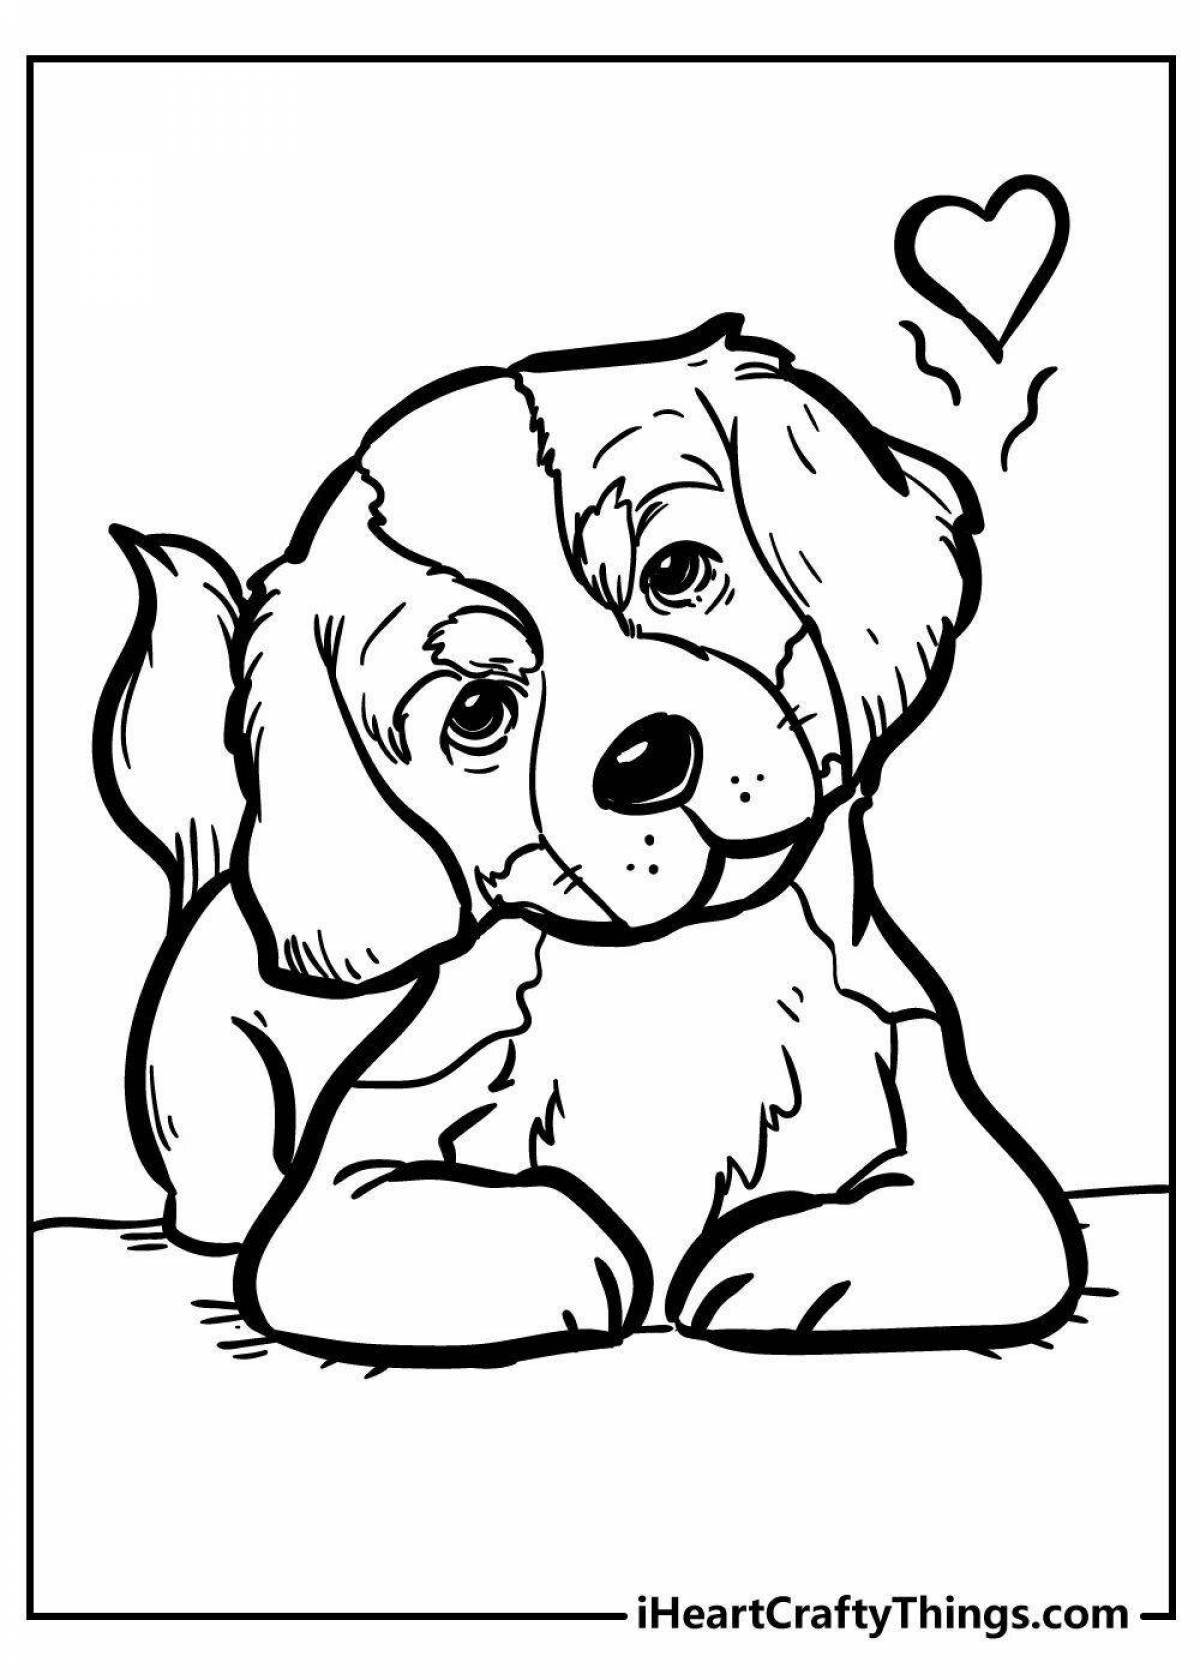 Snuggly раскраска собака с сердцем